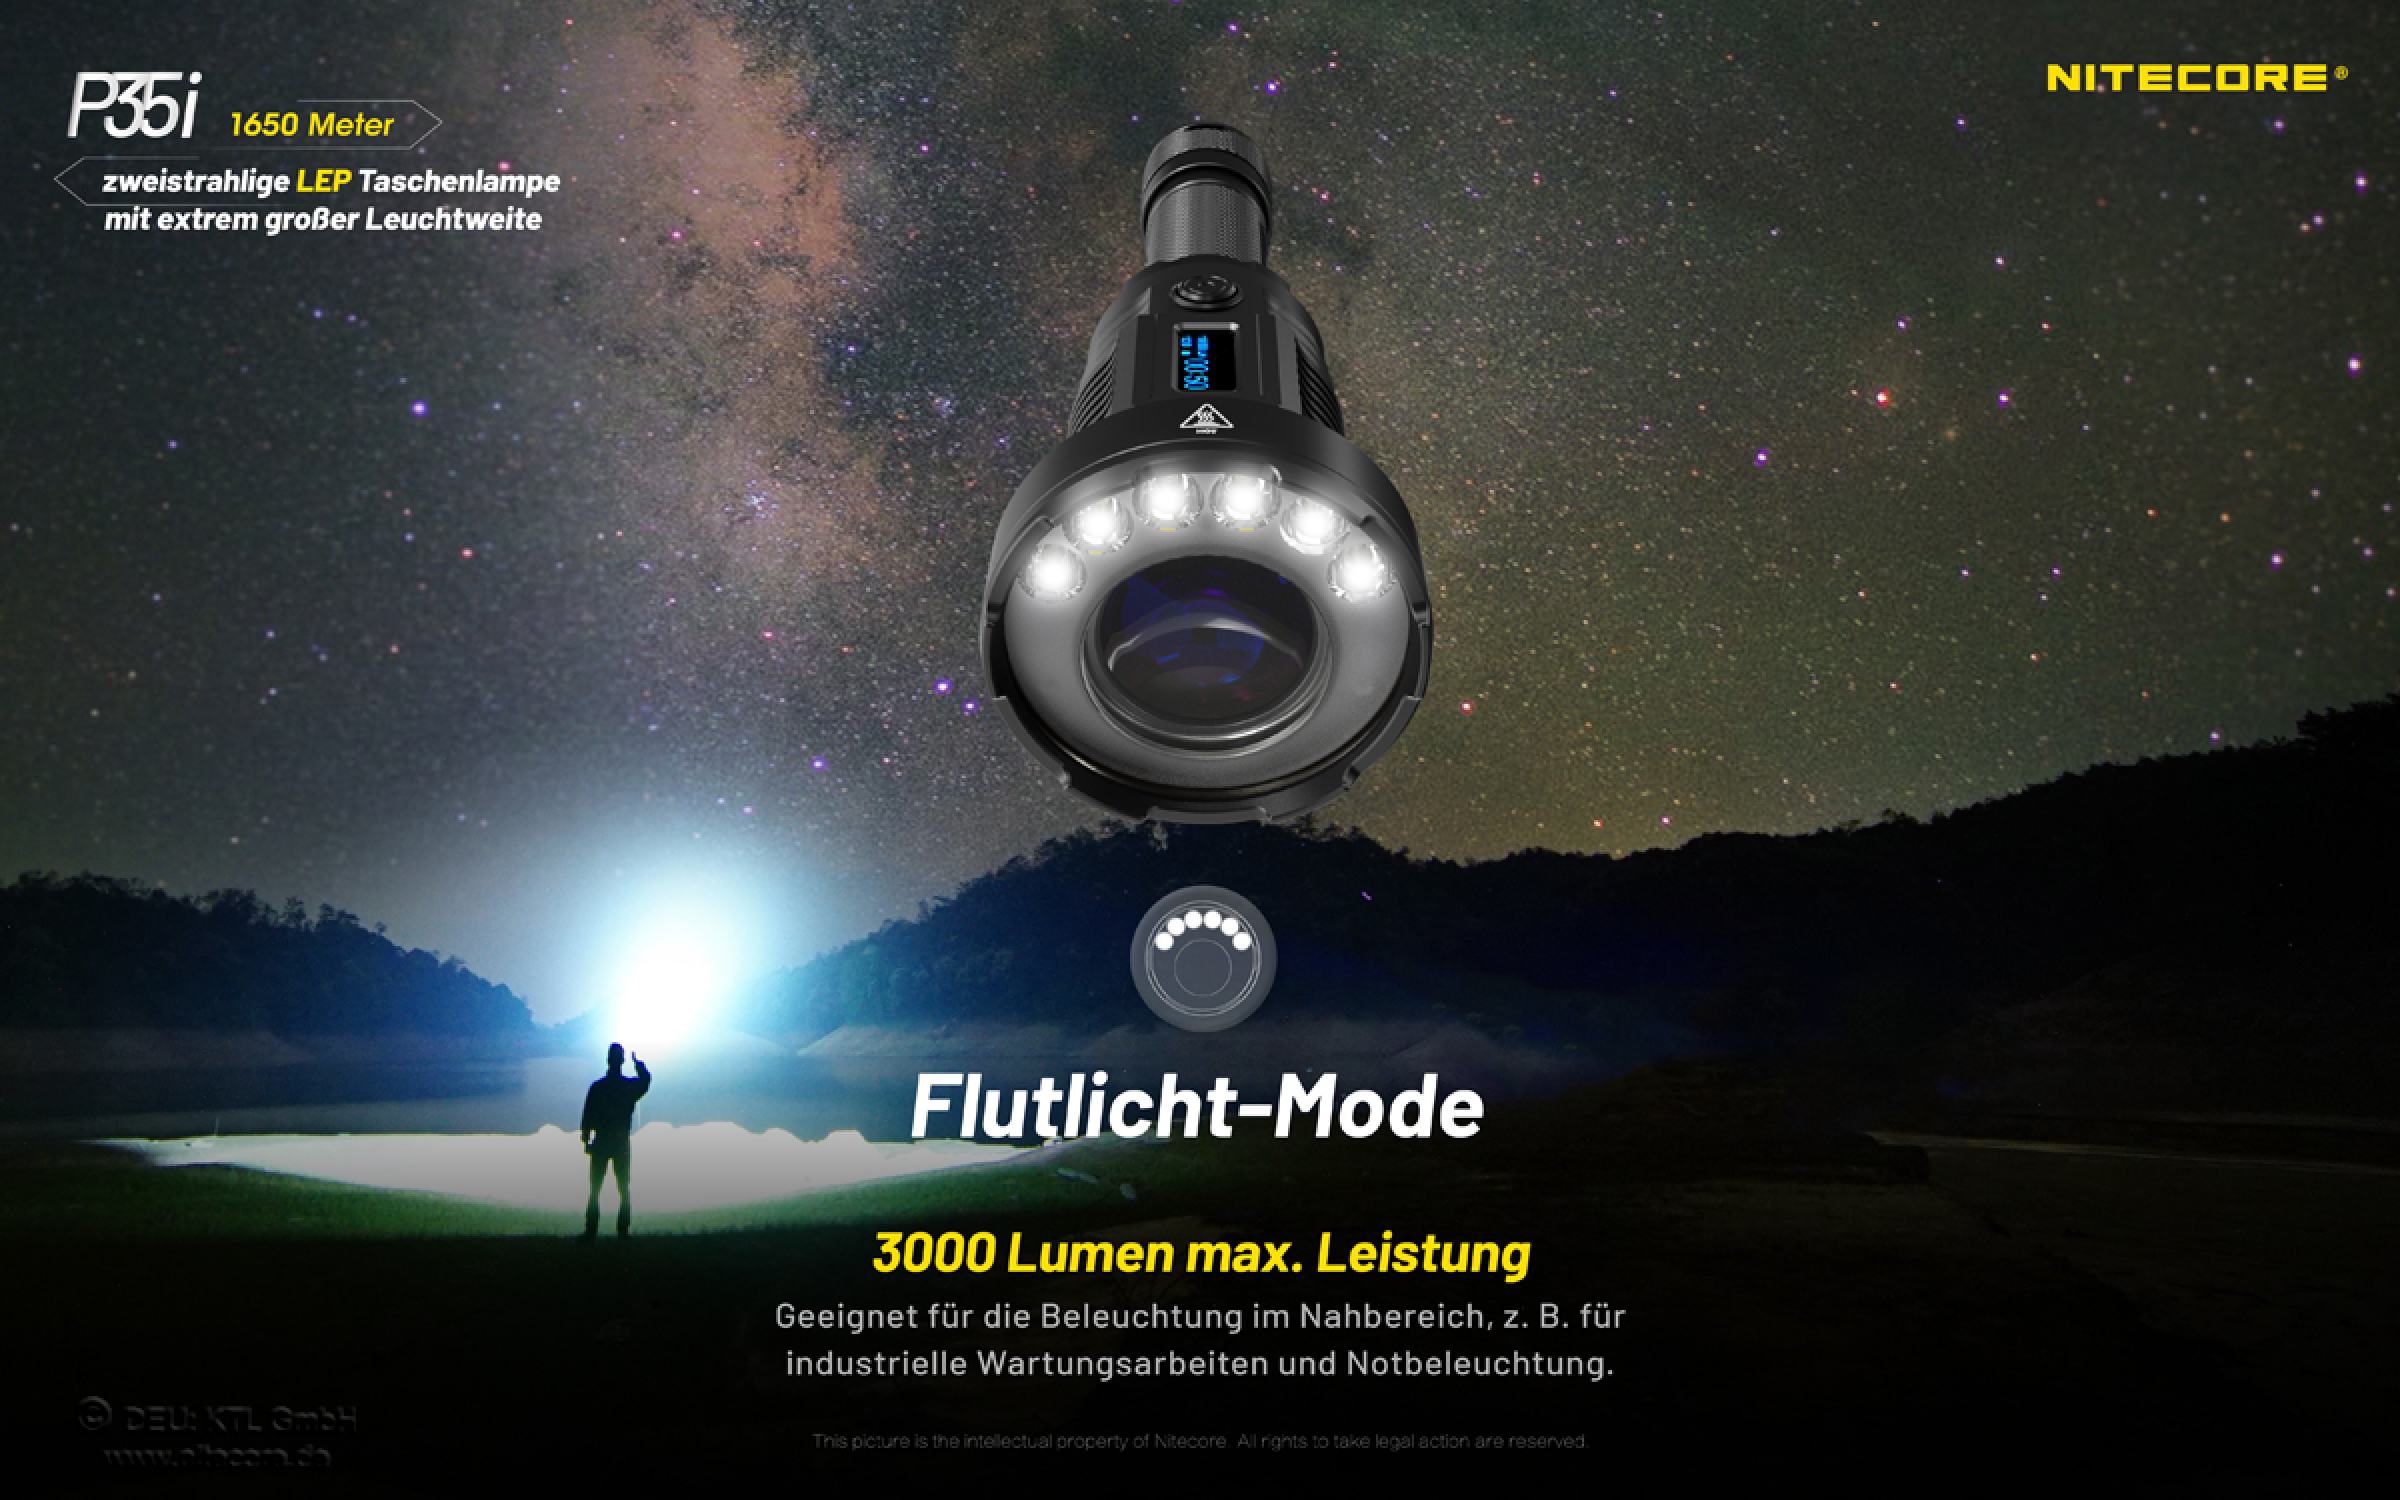 Nitecore Pro Flashlight P35i - LED & Laser light